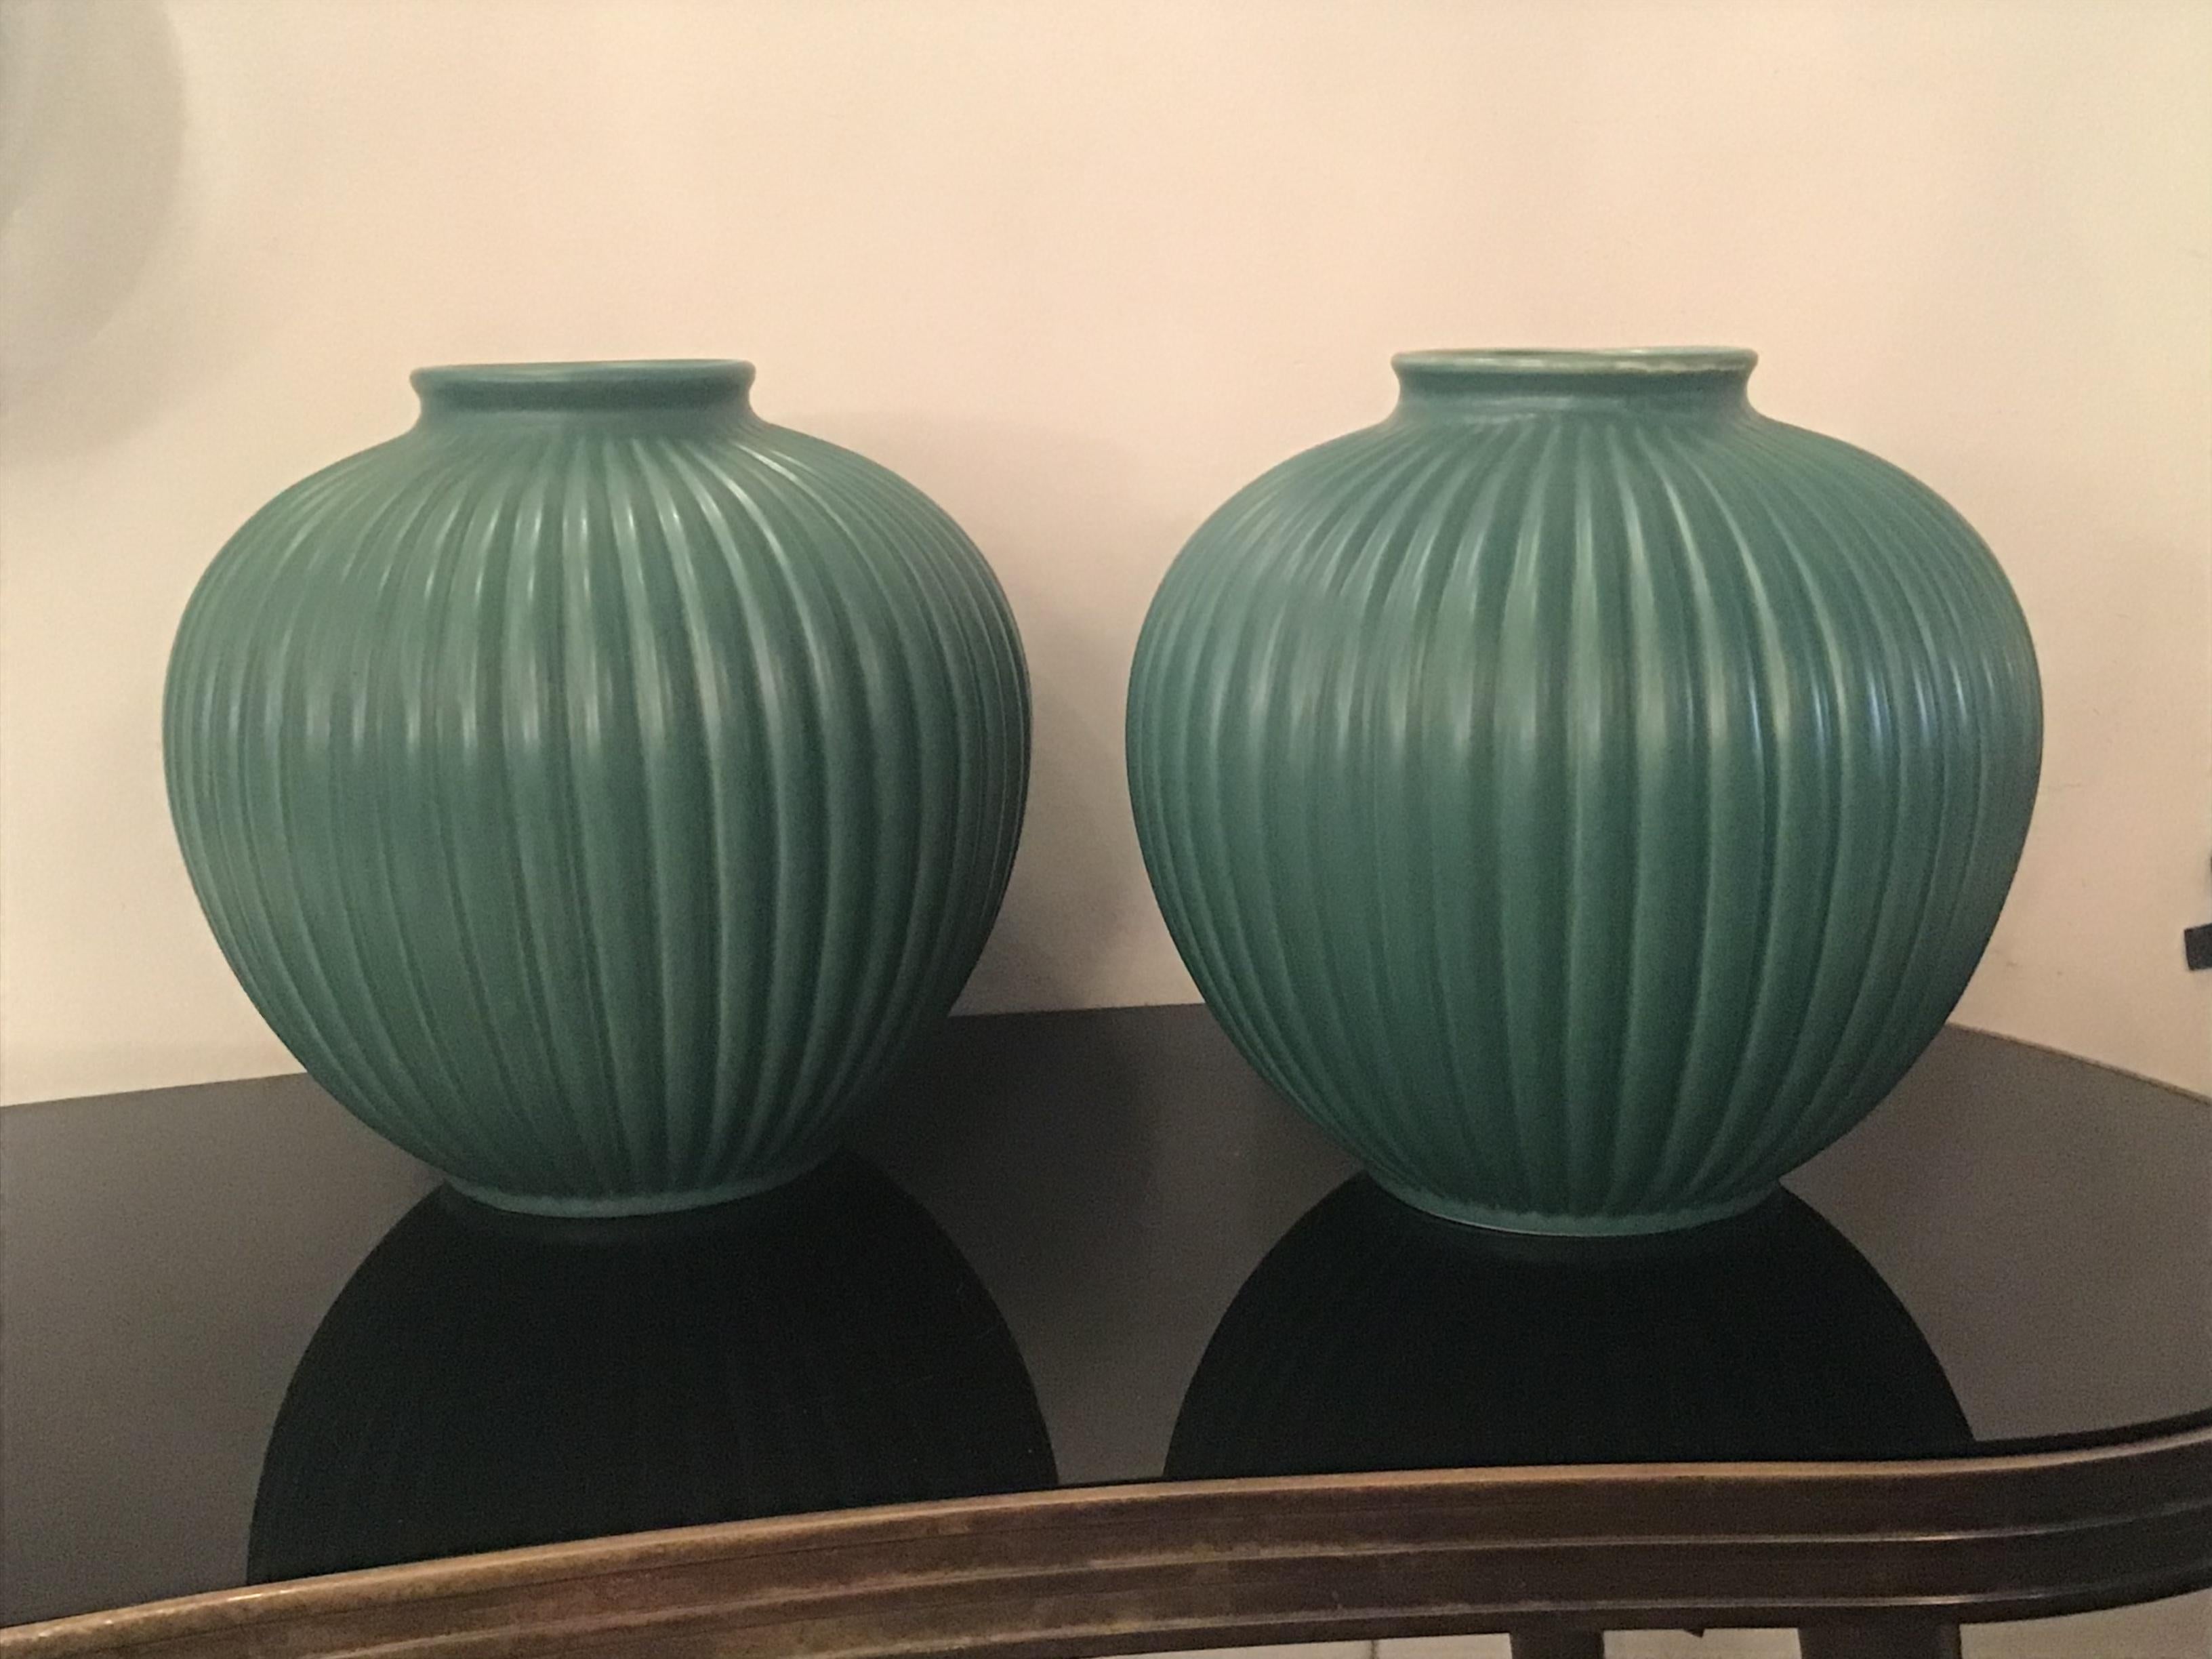 Richard Ginori Giovanni Gariboldi Pair of Vases Green Ceramic 1950 Italy For Sale 12